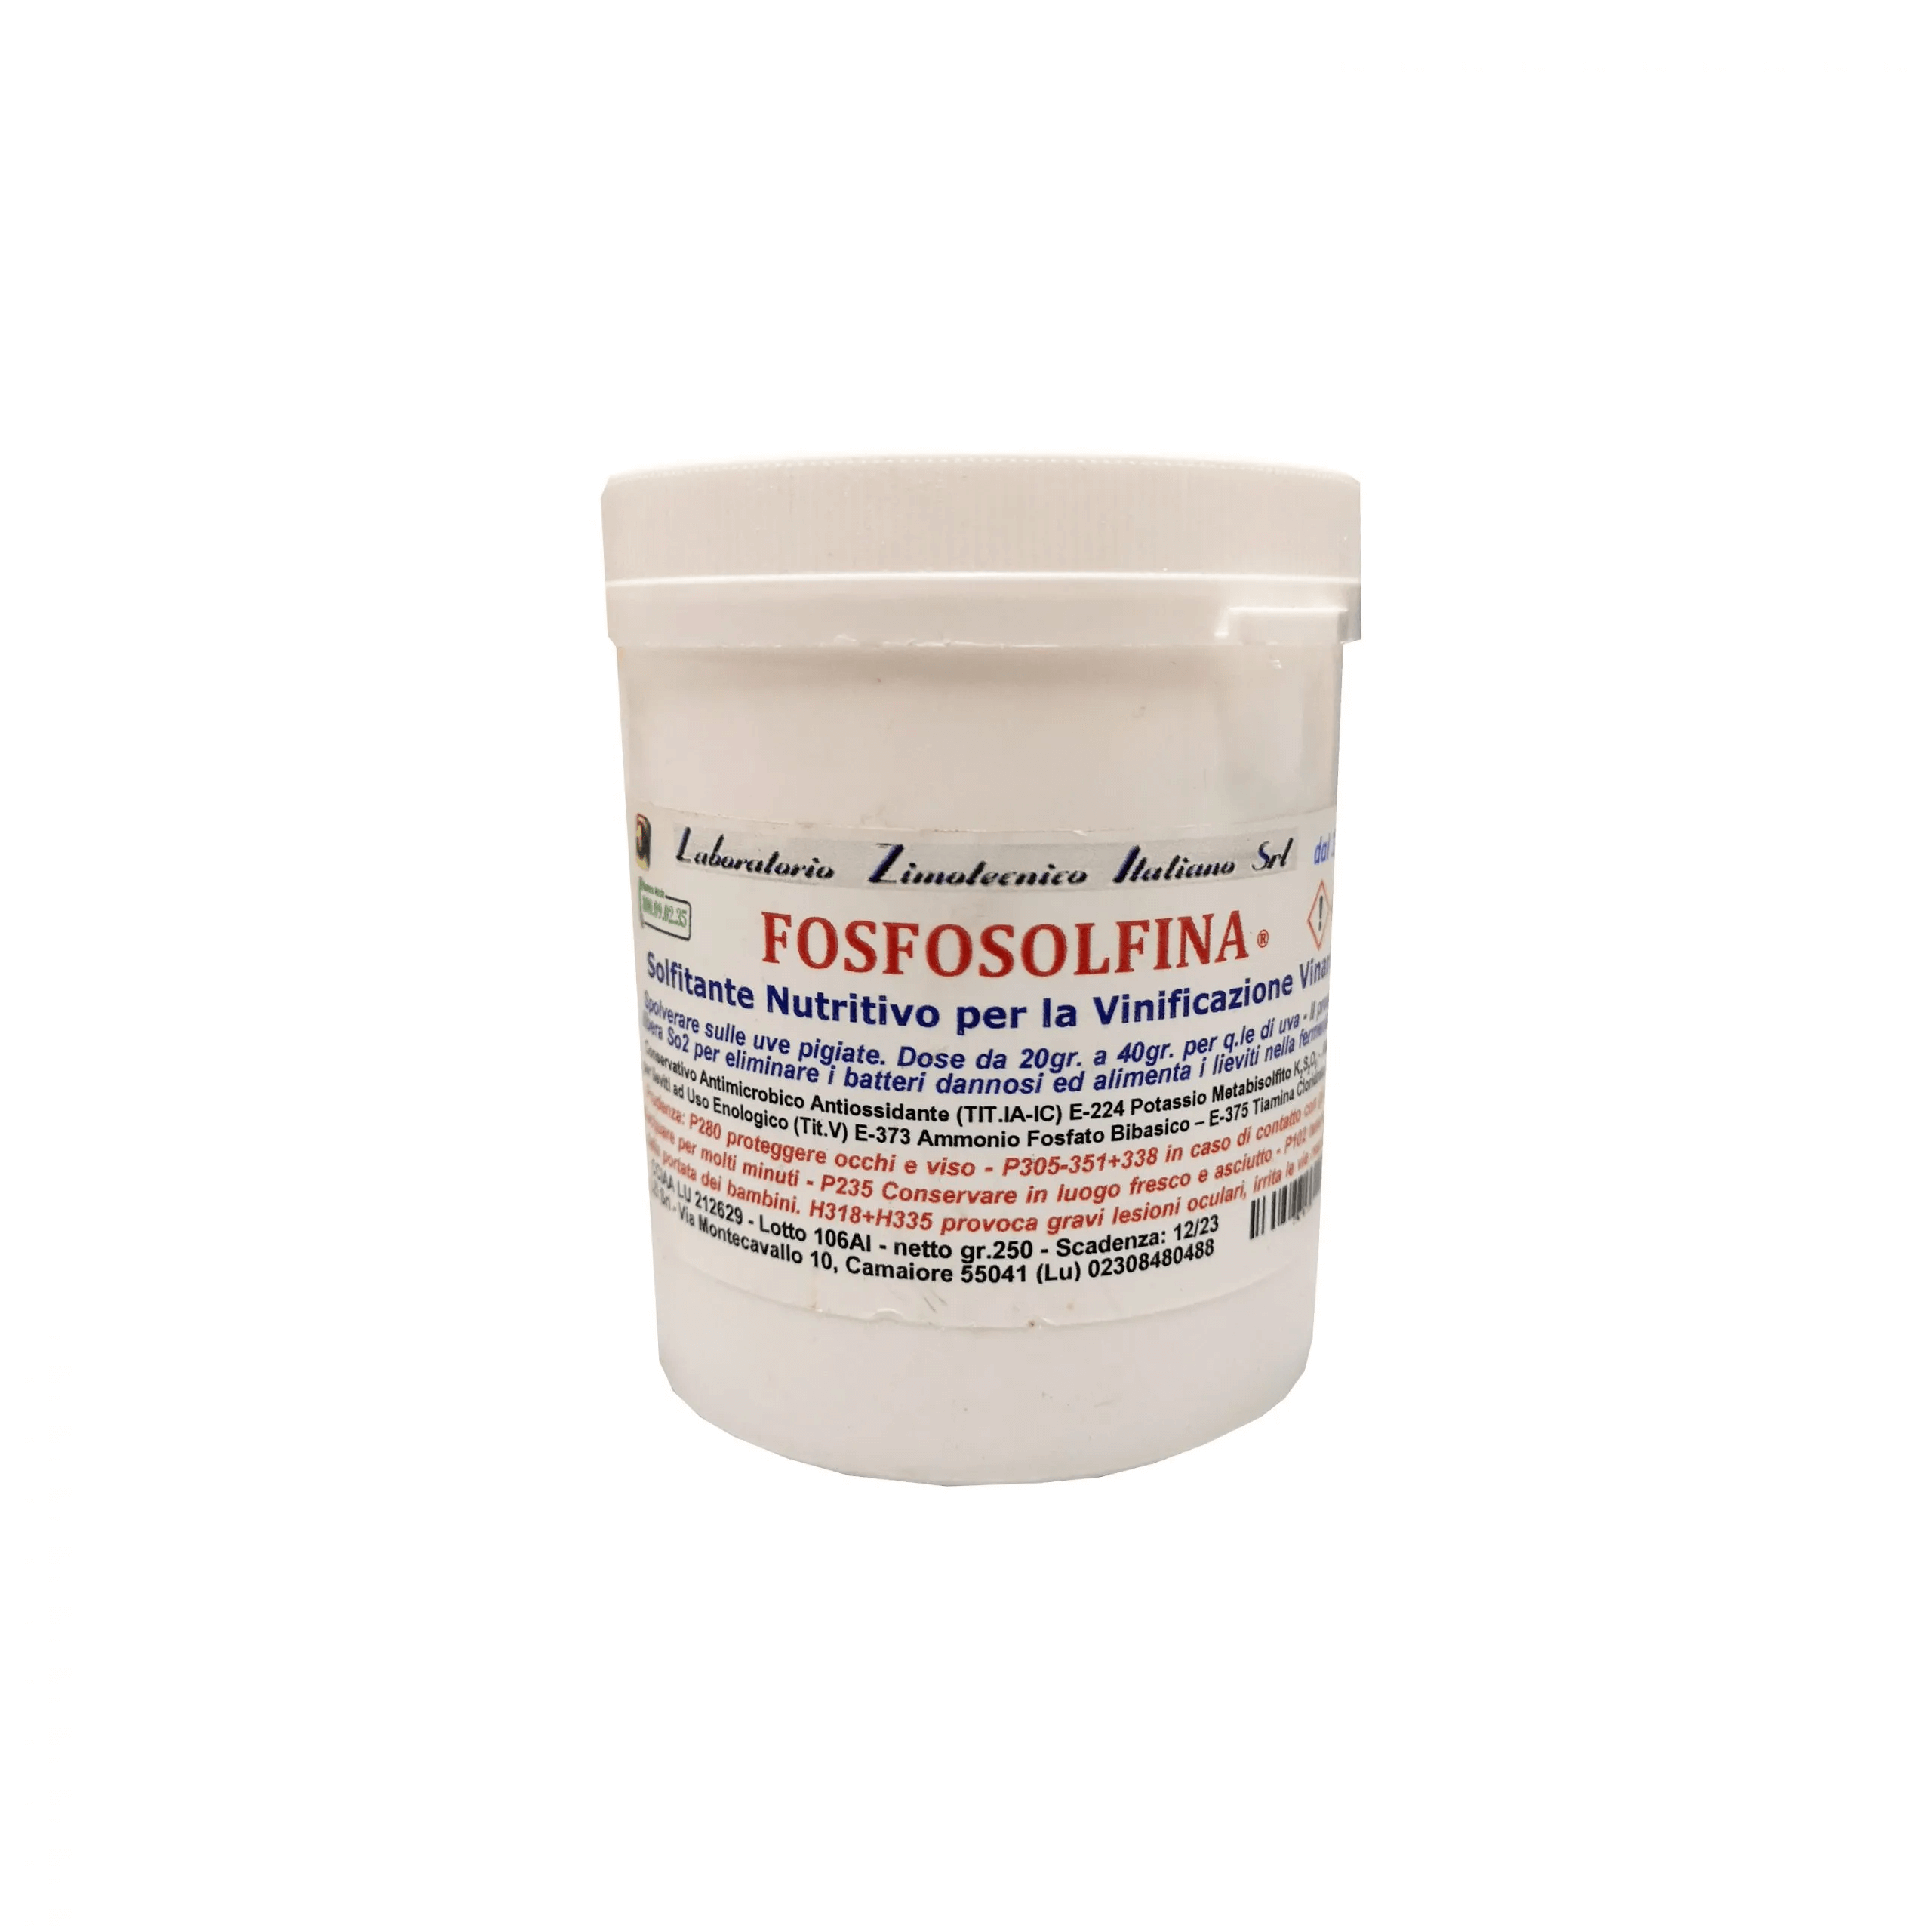 Fosfosolfina solfitante nutritivo per la vinificazione – 500 gr